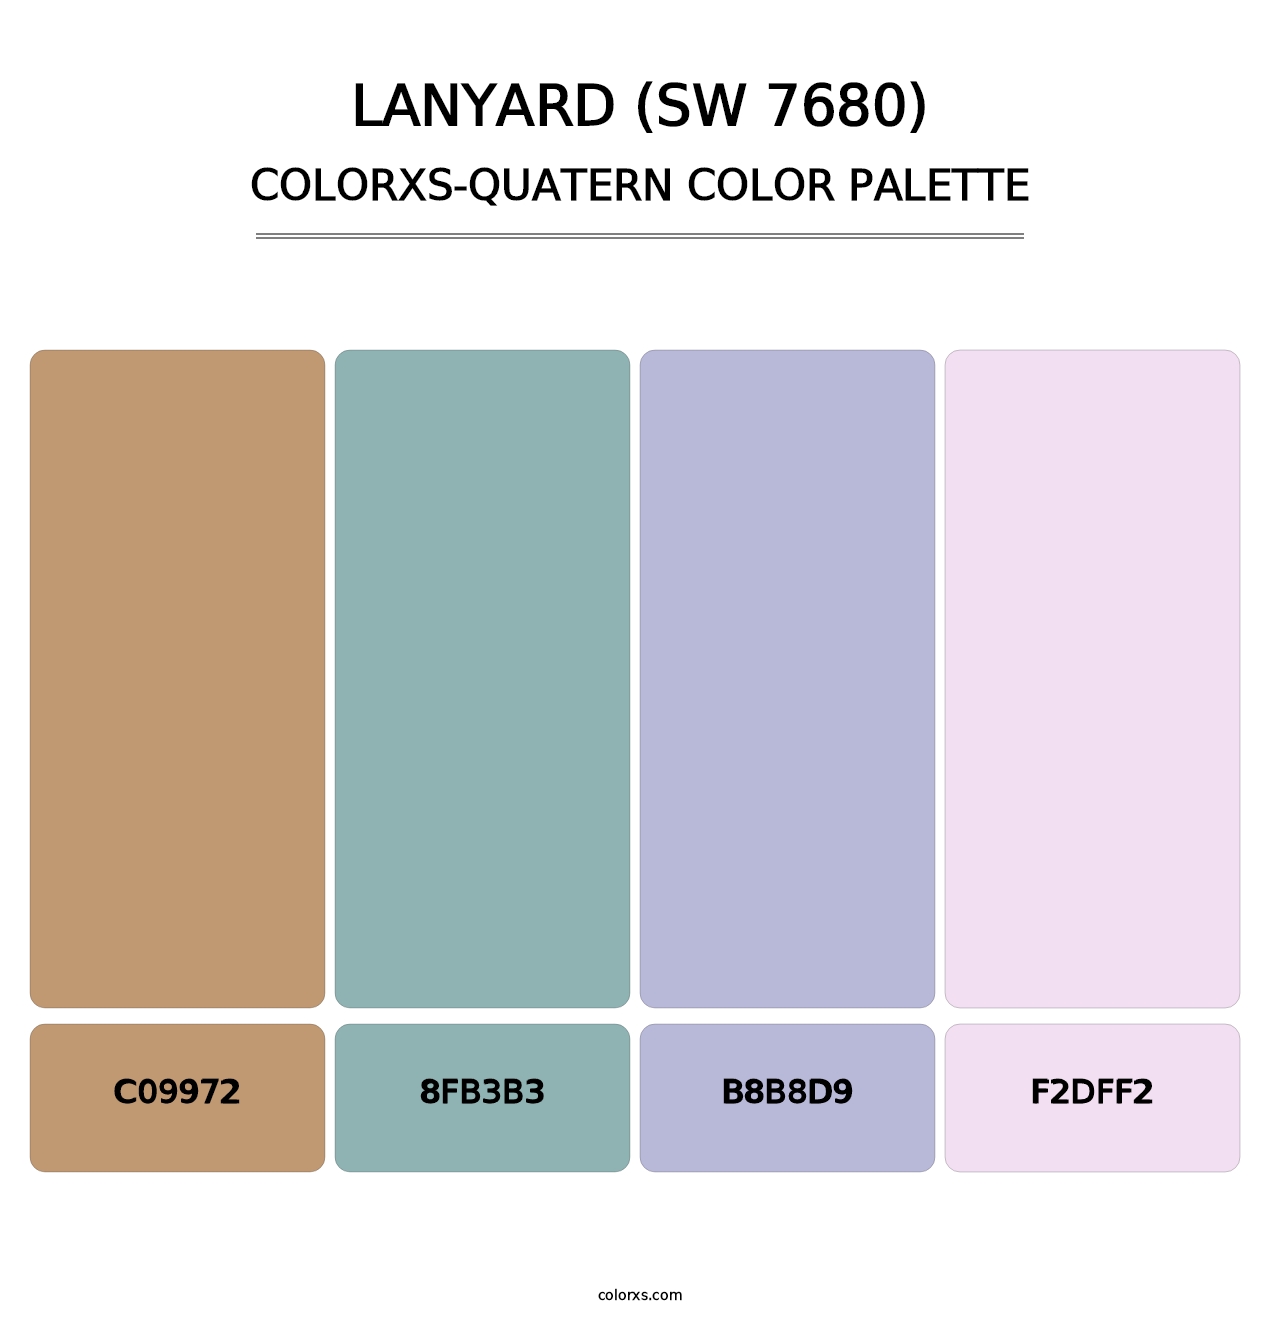 Lanyard (SW 7680) - Colorxs Quatern Palette